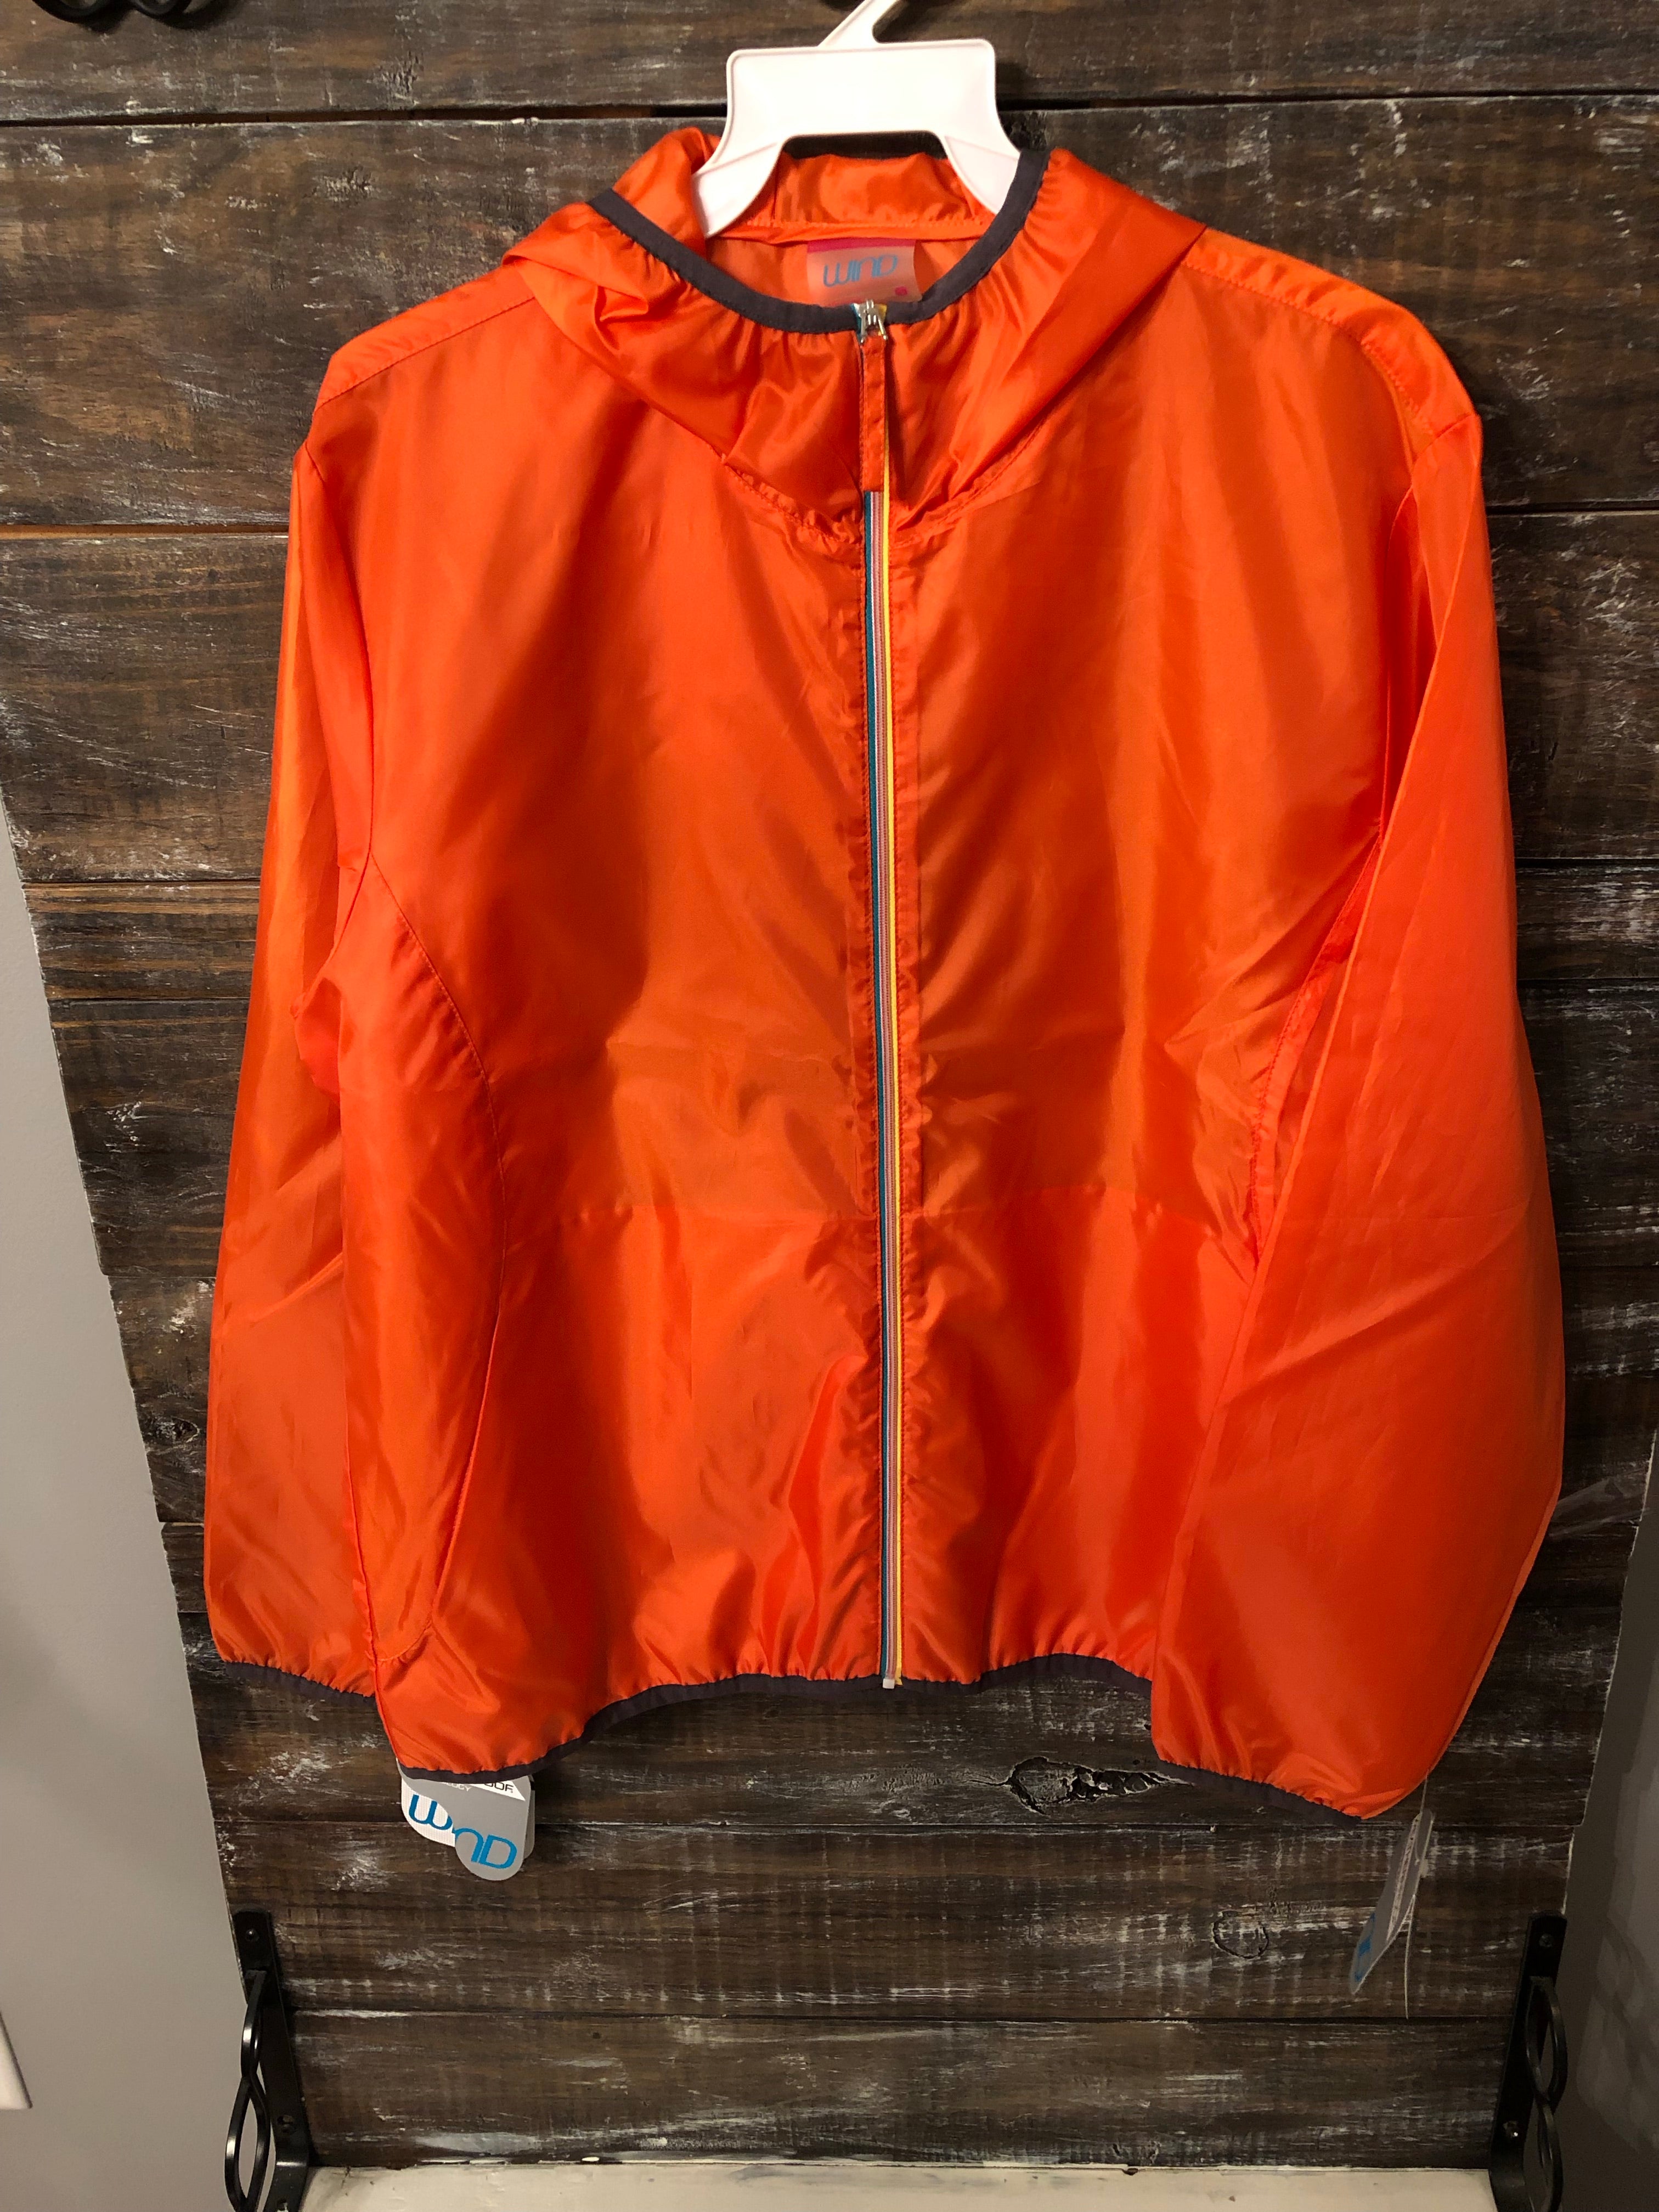 Orange lightweight weatherproof jacket with hood